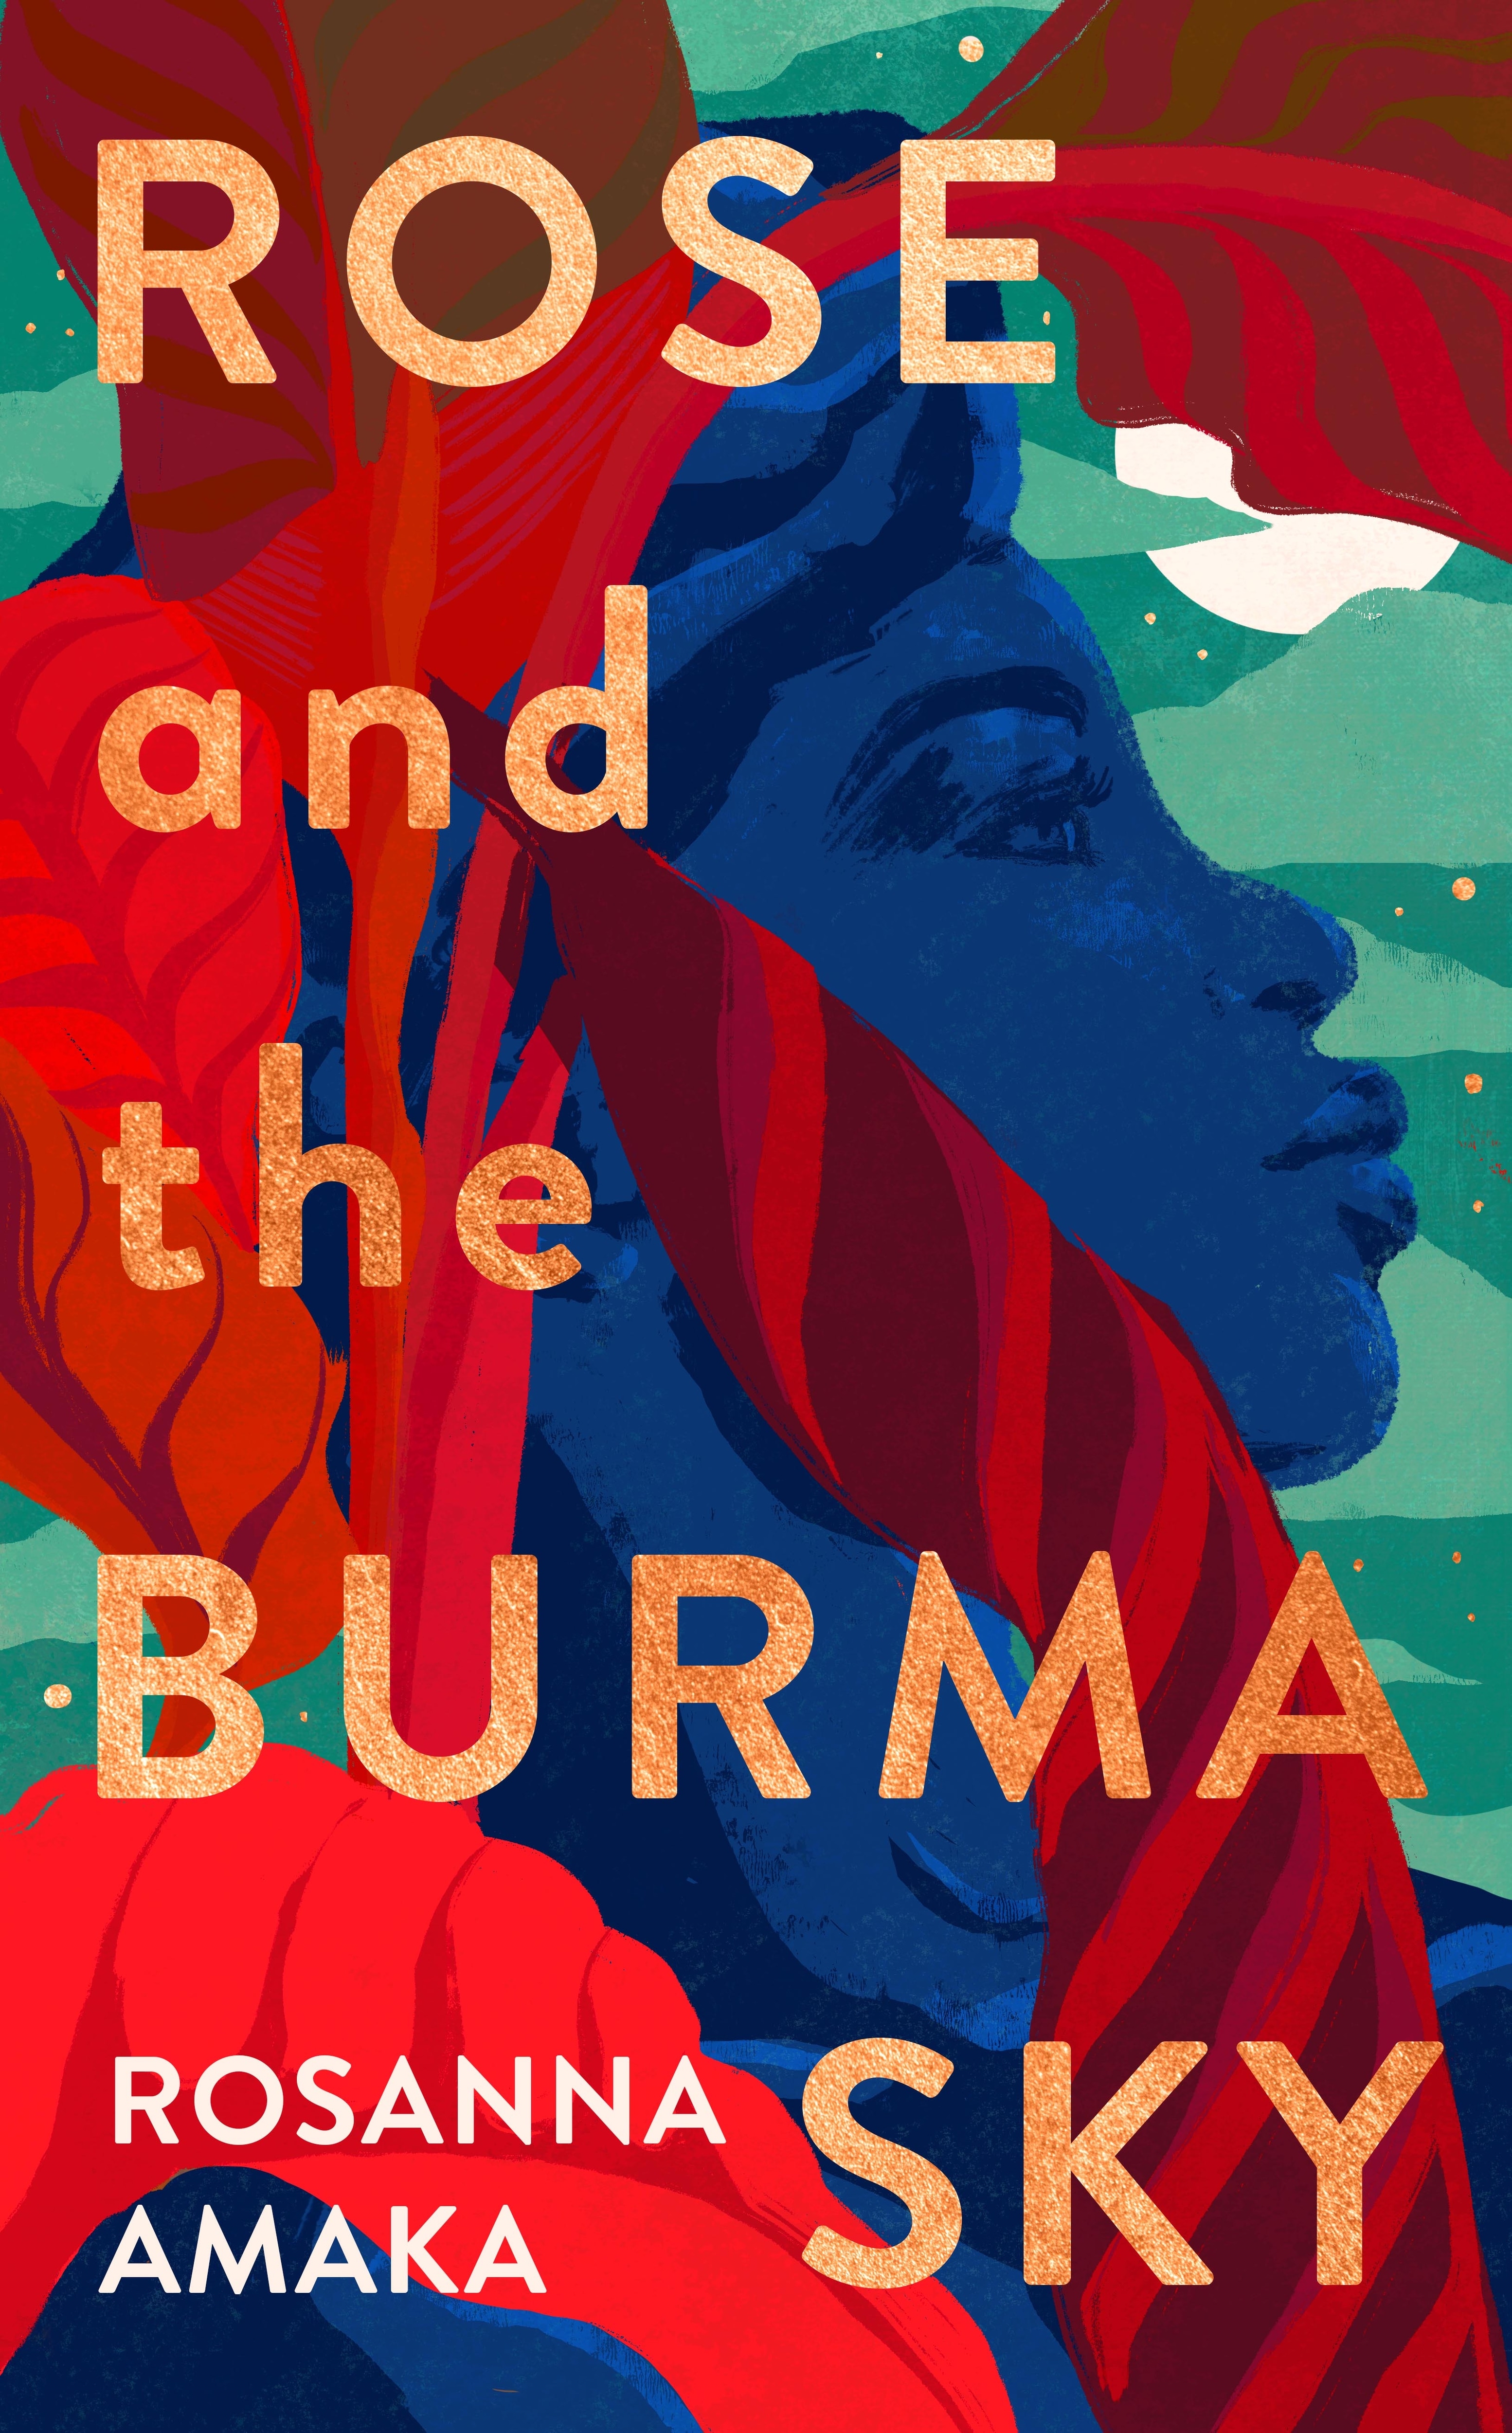 Book “Rose and the Burma Sky” by Rosanna Amaka — February 9, 2023